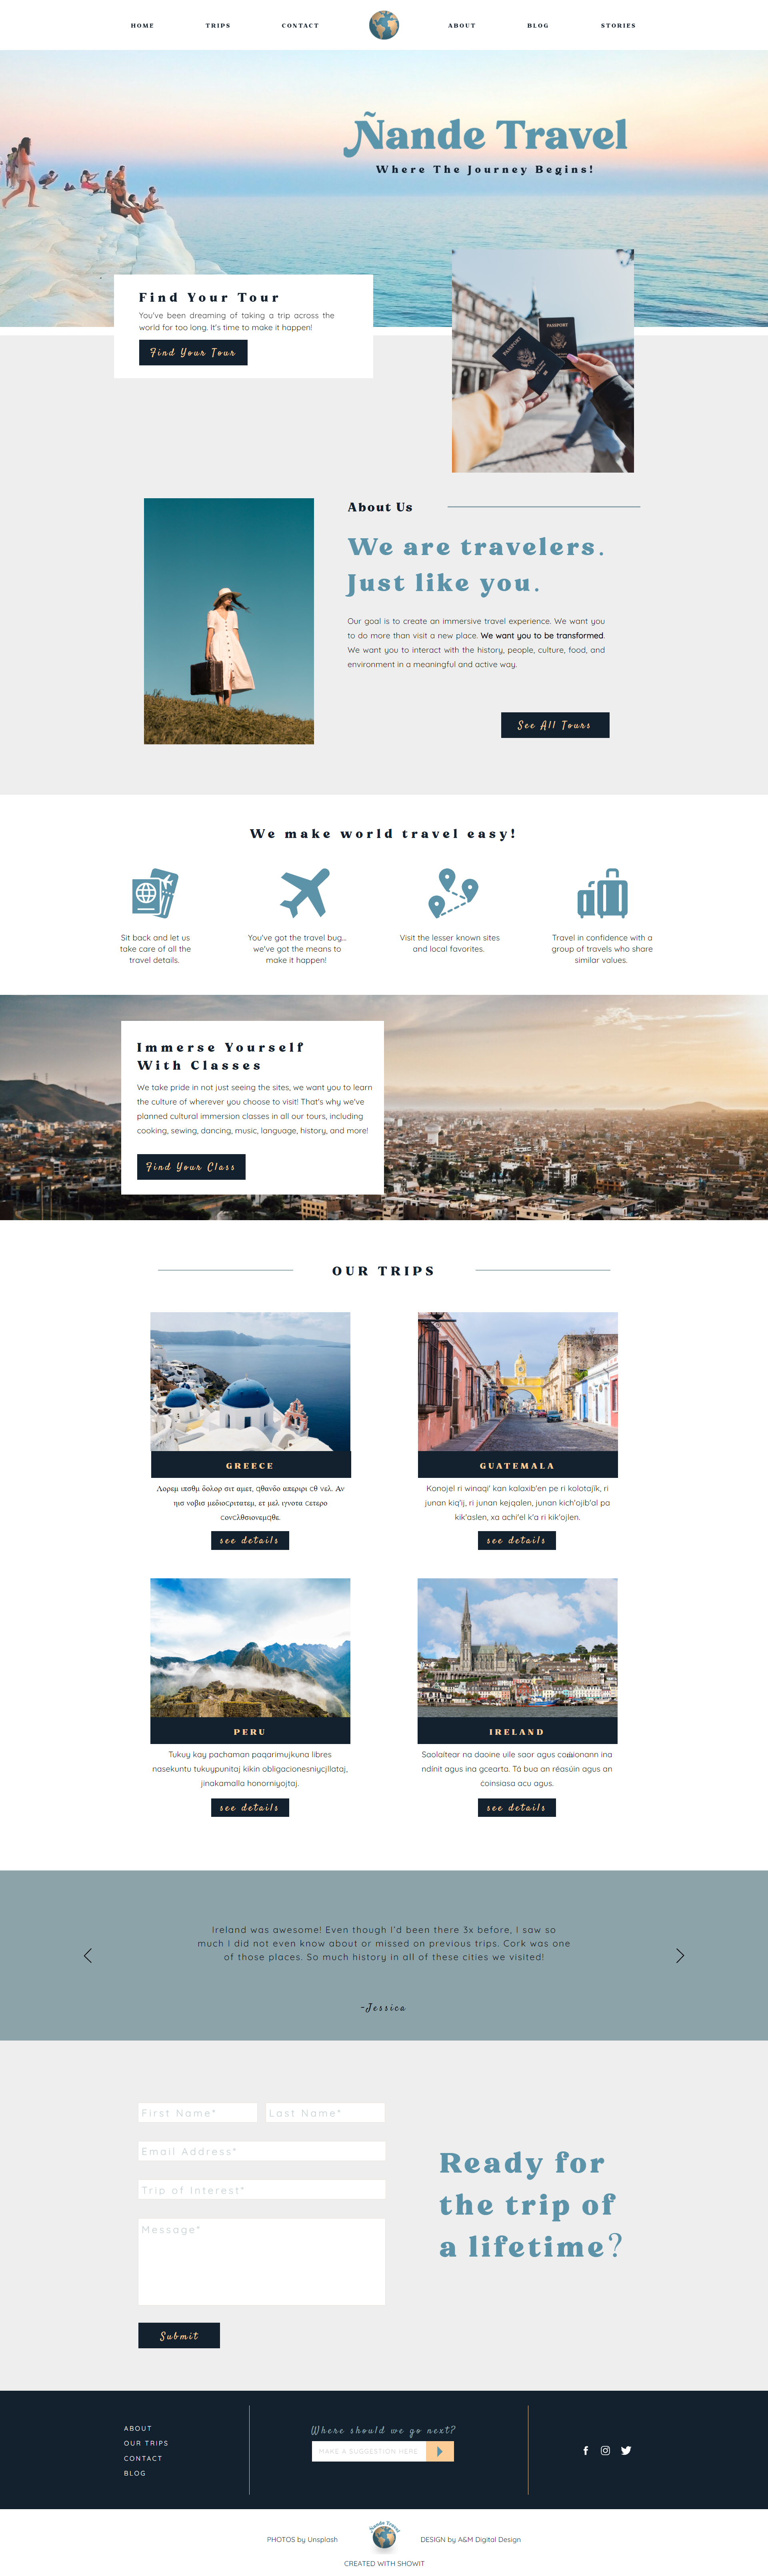 Austin's website home page for Nande Travel (the winning design ;))